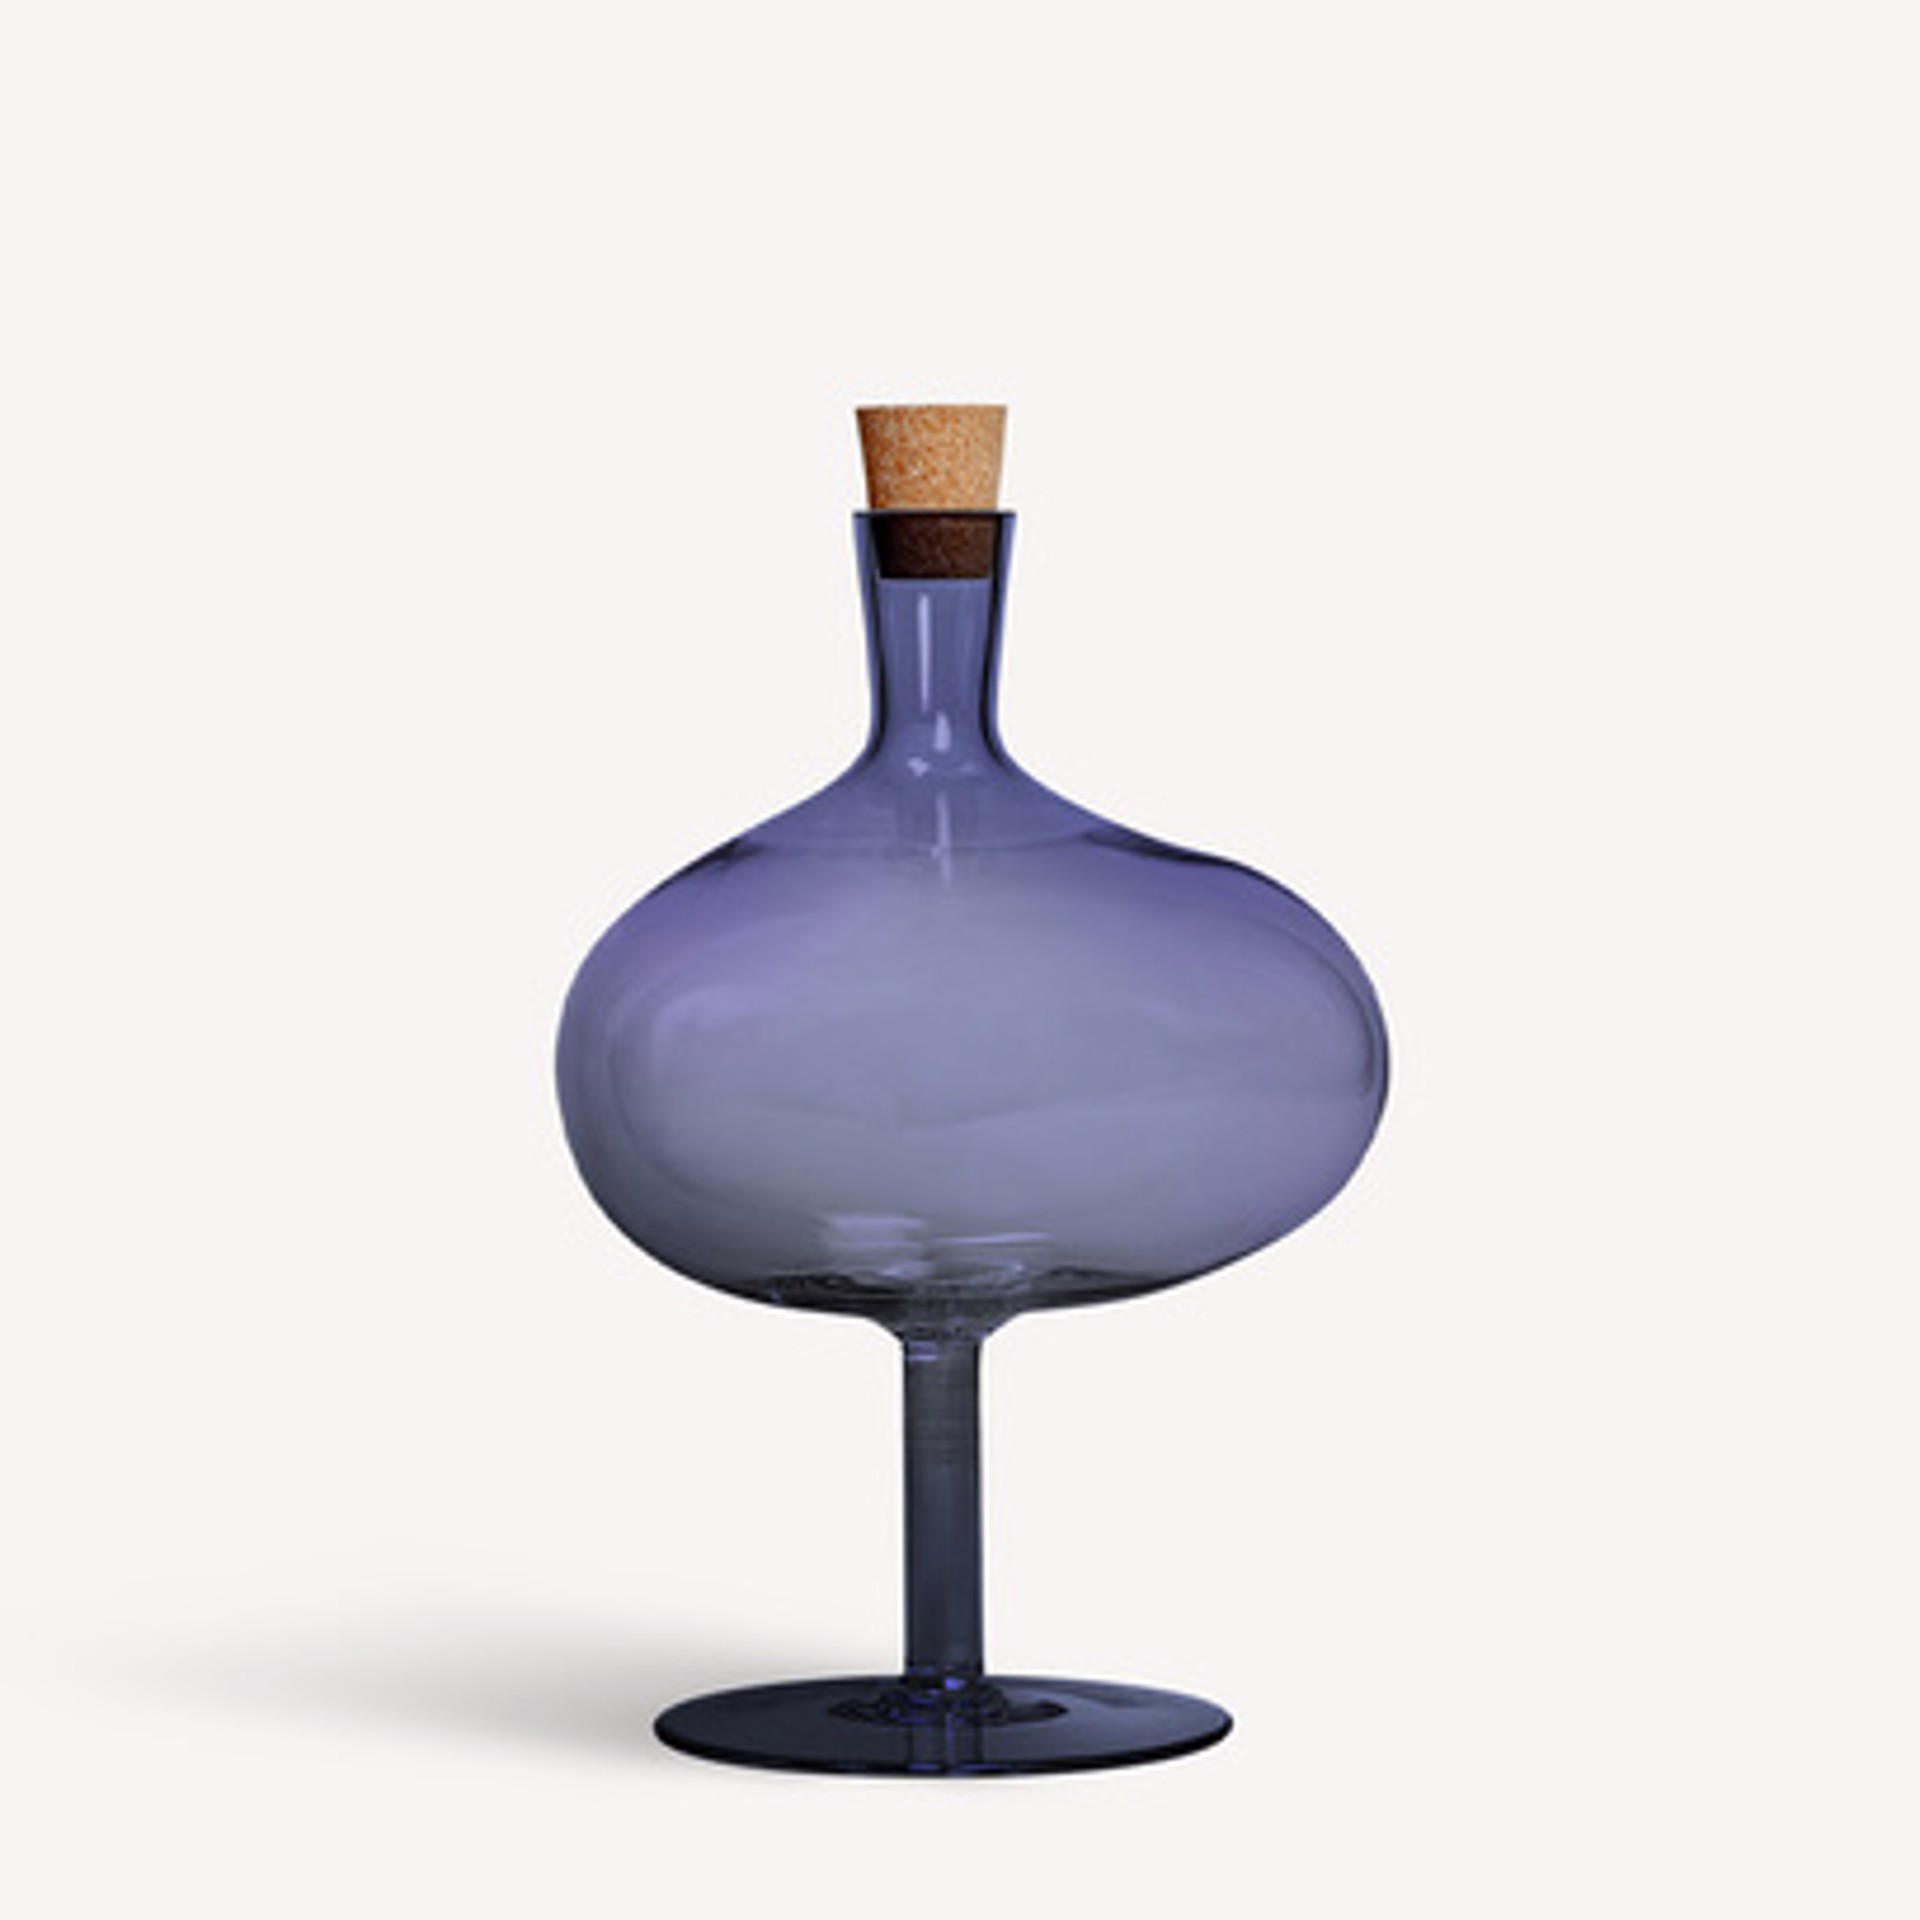 Kosta Boda- Bod Bottle- Midnight Blue- Large by GVL CMKT